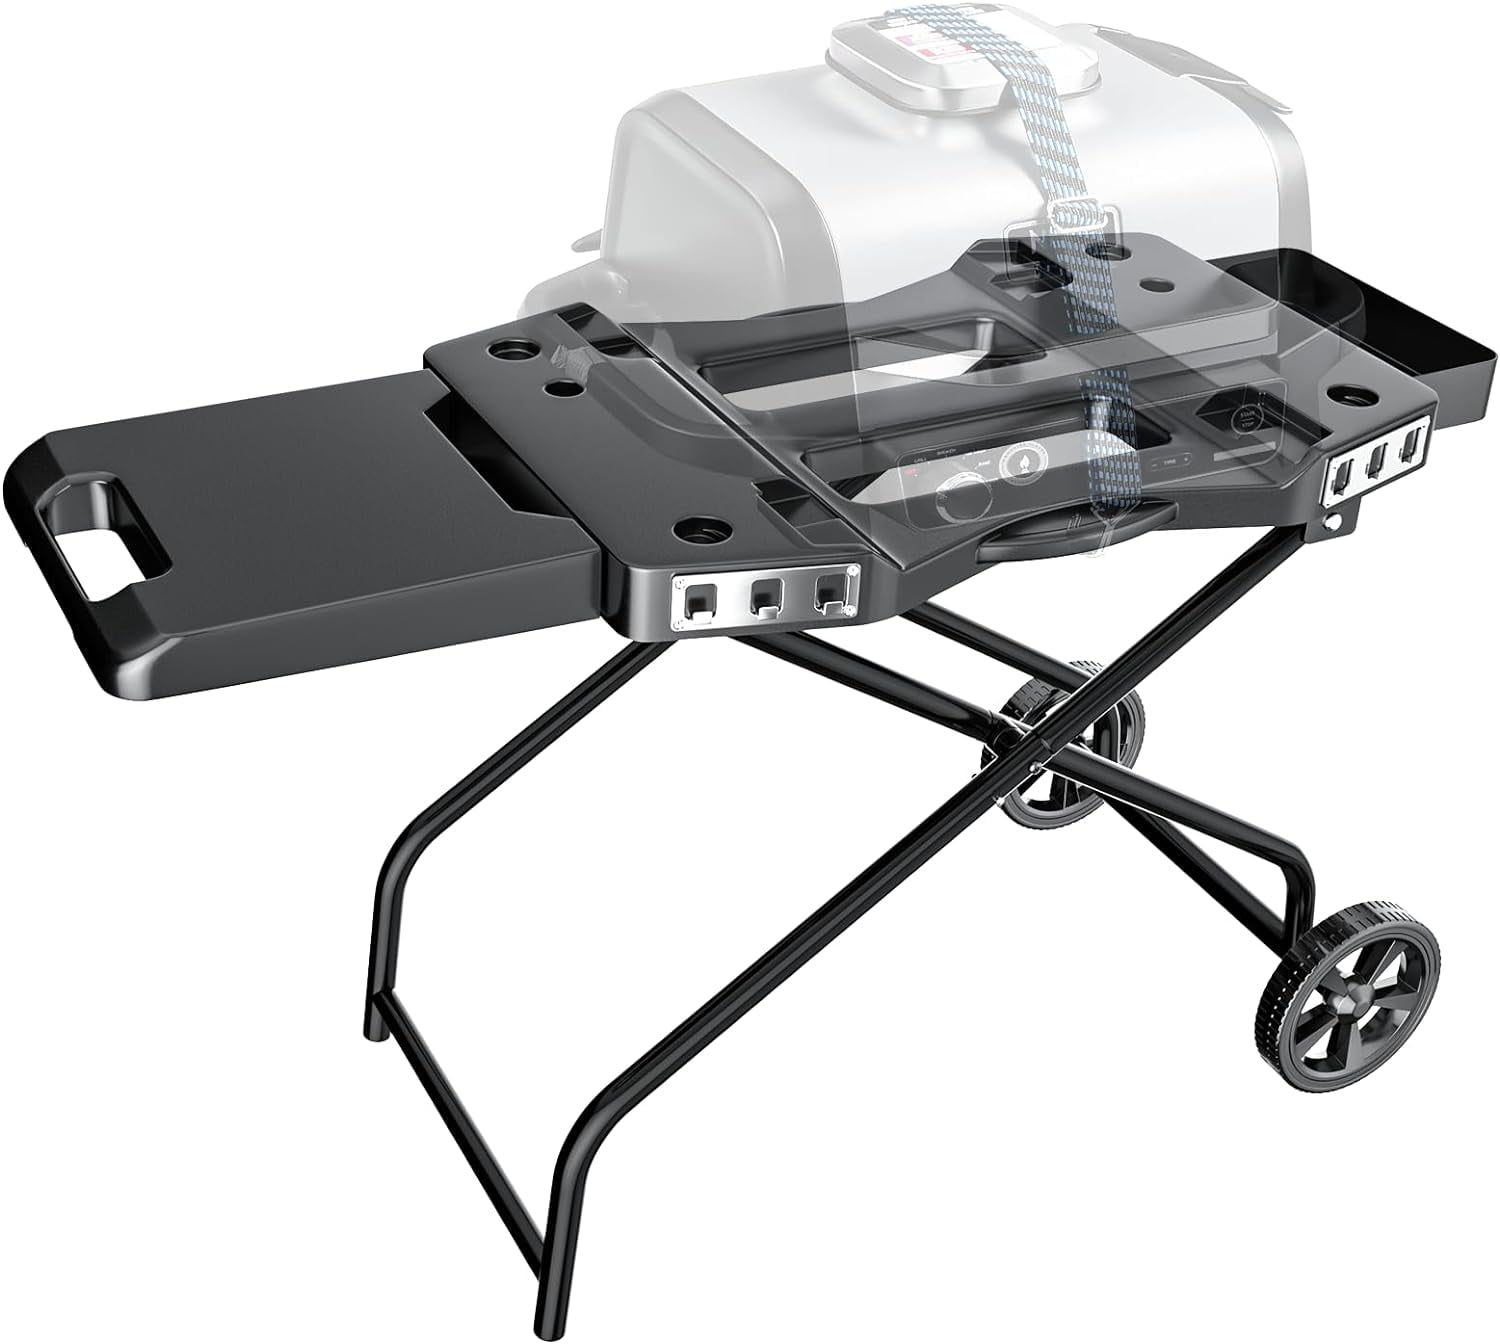 Hisencn Portable Grill Cart for Ninja Woodfire Grill OG700 Series, Folding  Outdoor Grill Stand for Ninja OG701, Pit Boss 10697/10724, 22  Blackstone,Traeger Ranger Griddle with Table Shelf and Basket 